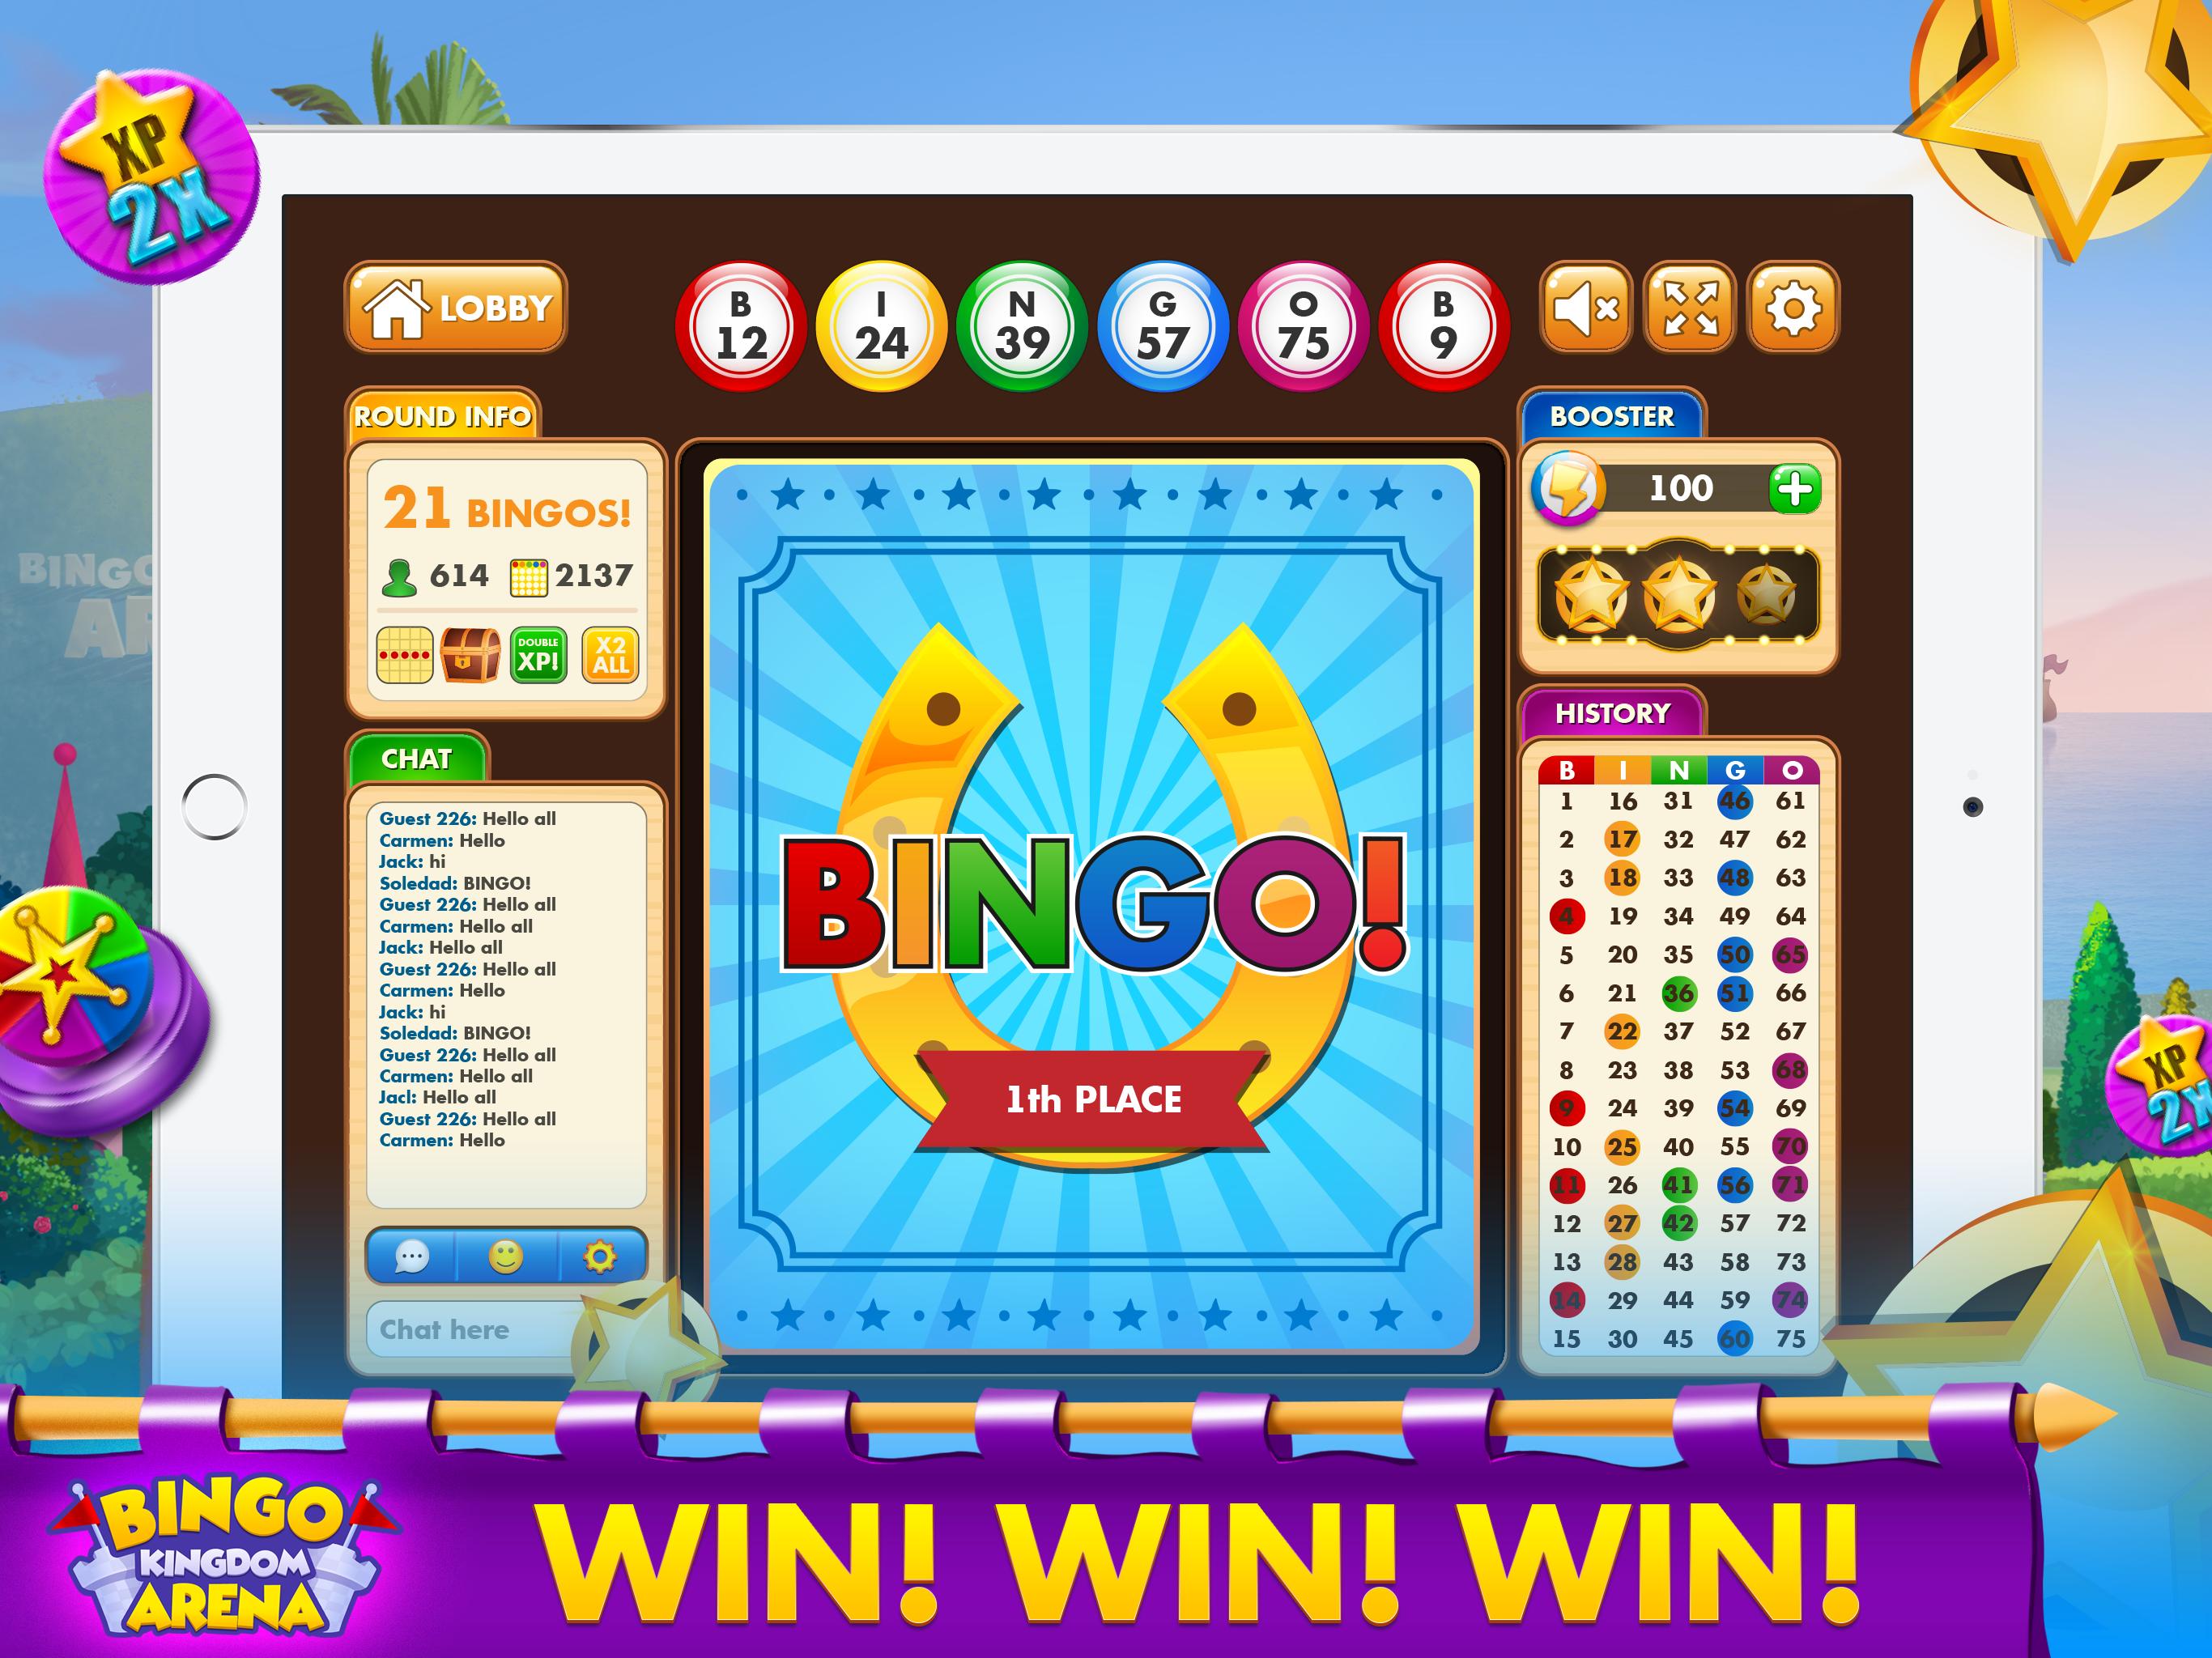 Bingo Kingdom Arena For Android Apk Download